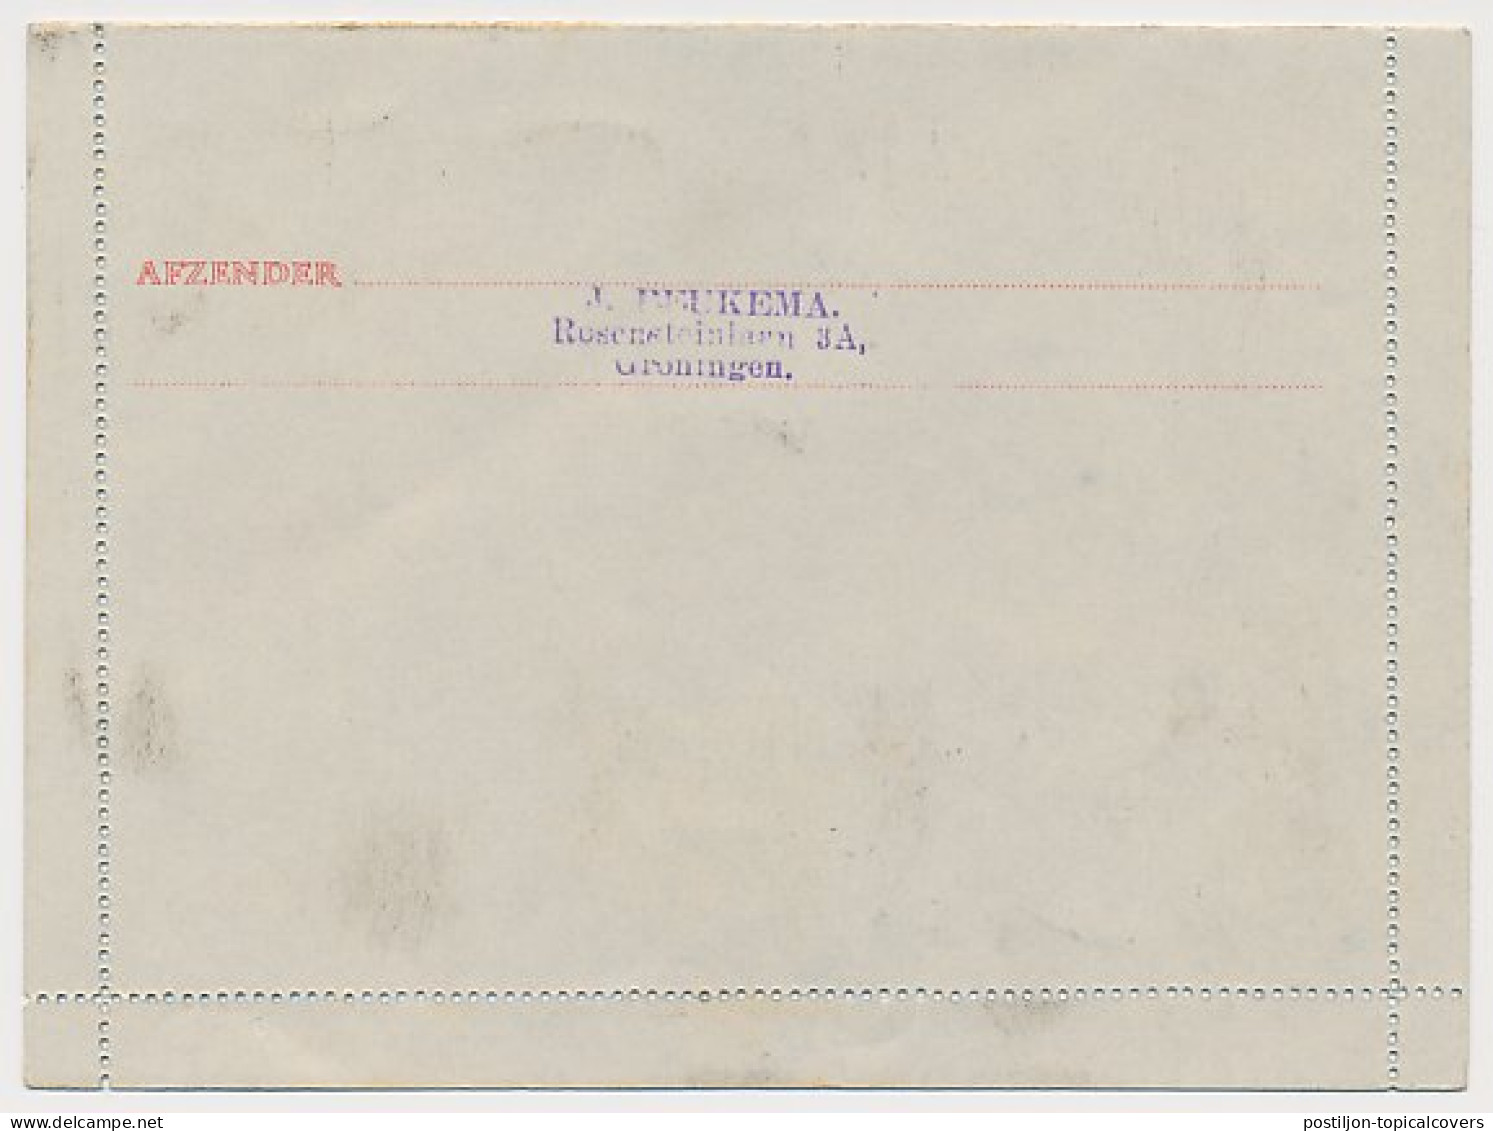 Postblad G. 17 Y / Aangetekend / Bijfrankering Groningen 1929  - Postal Stationery